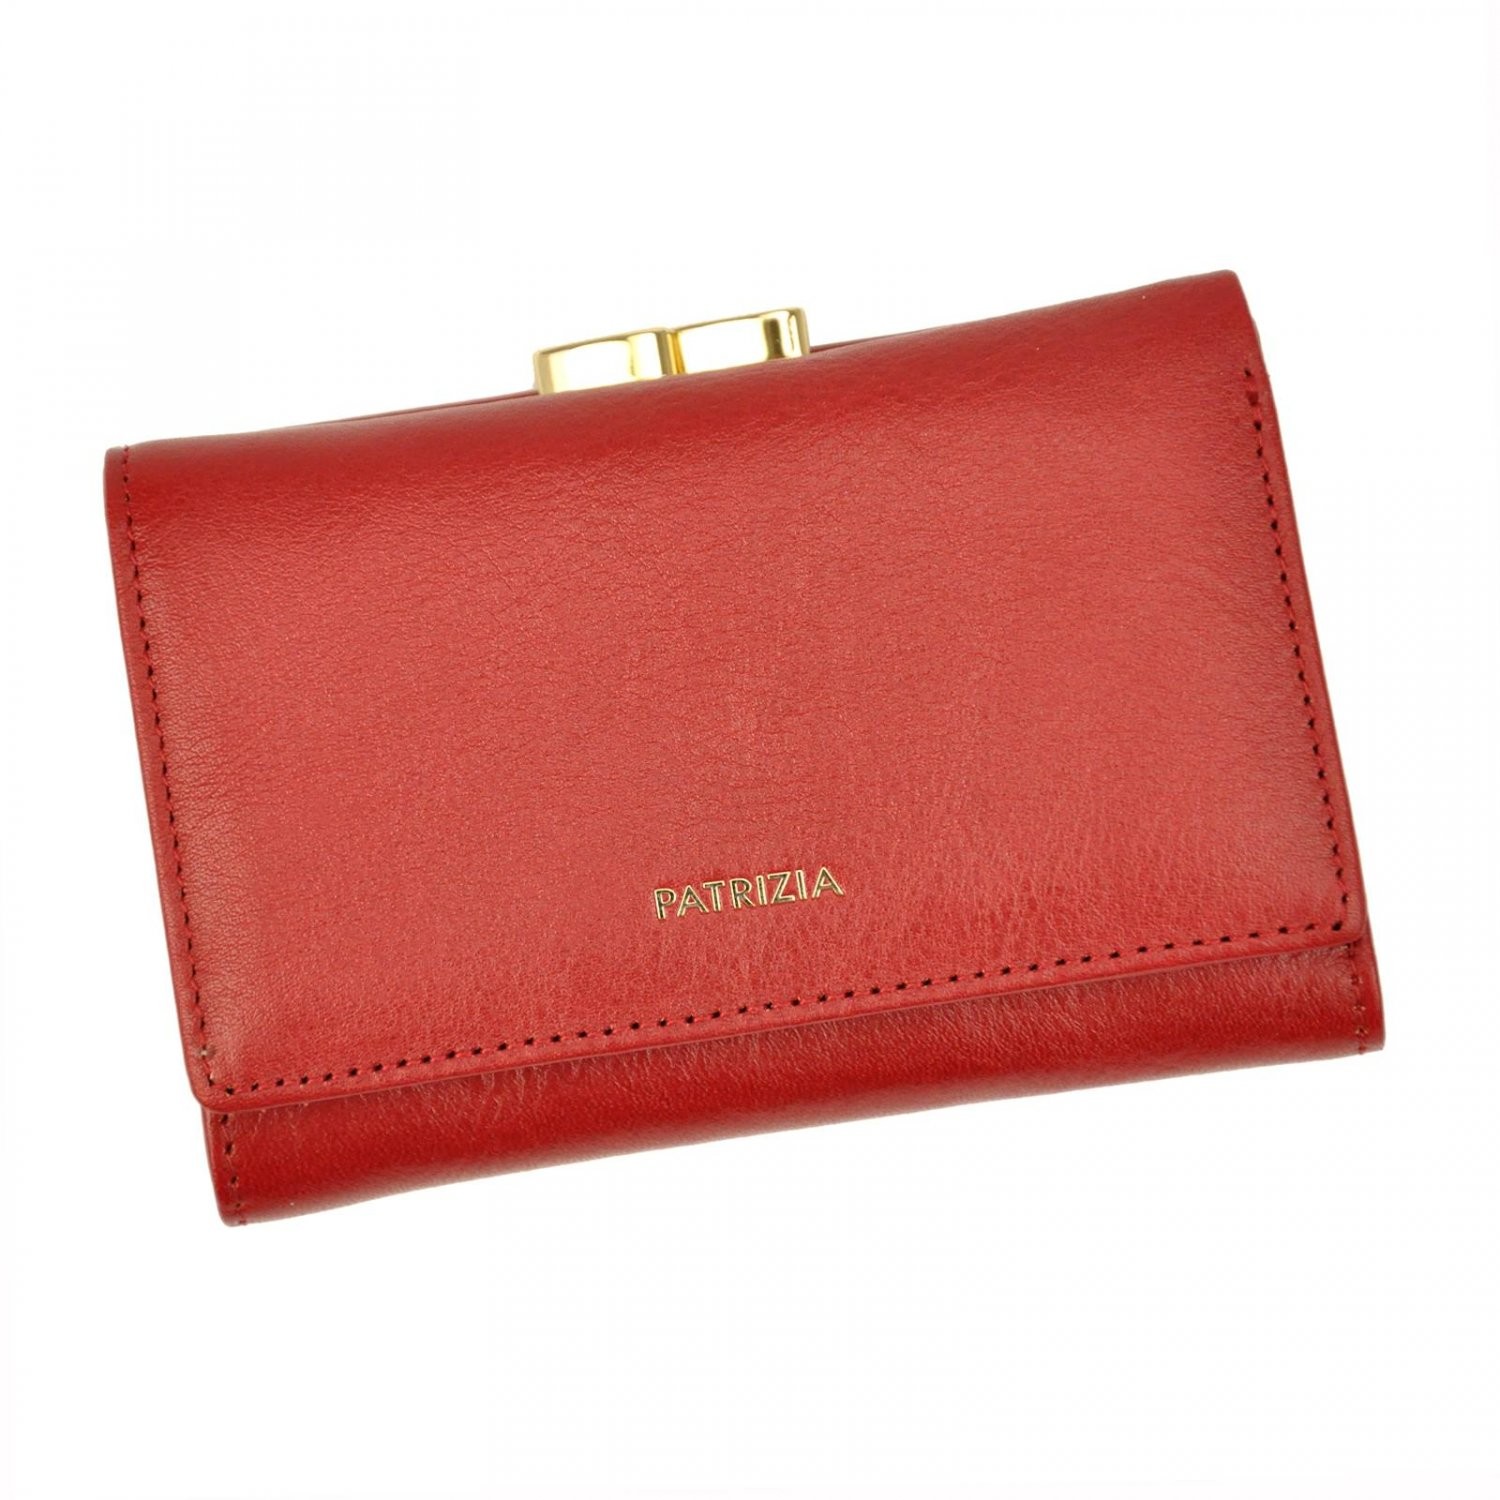 Dámská kožená peněženka červená - Patrizia Florencia červená